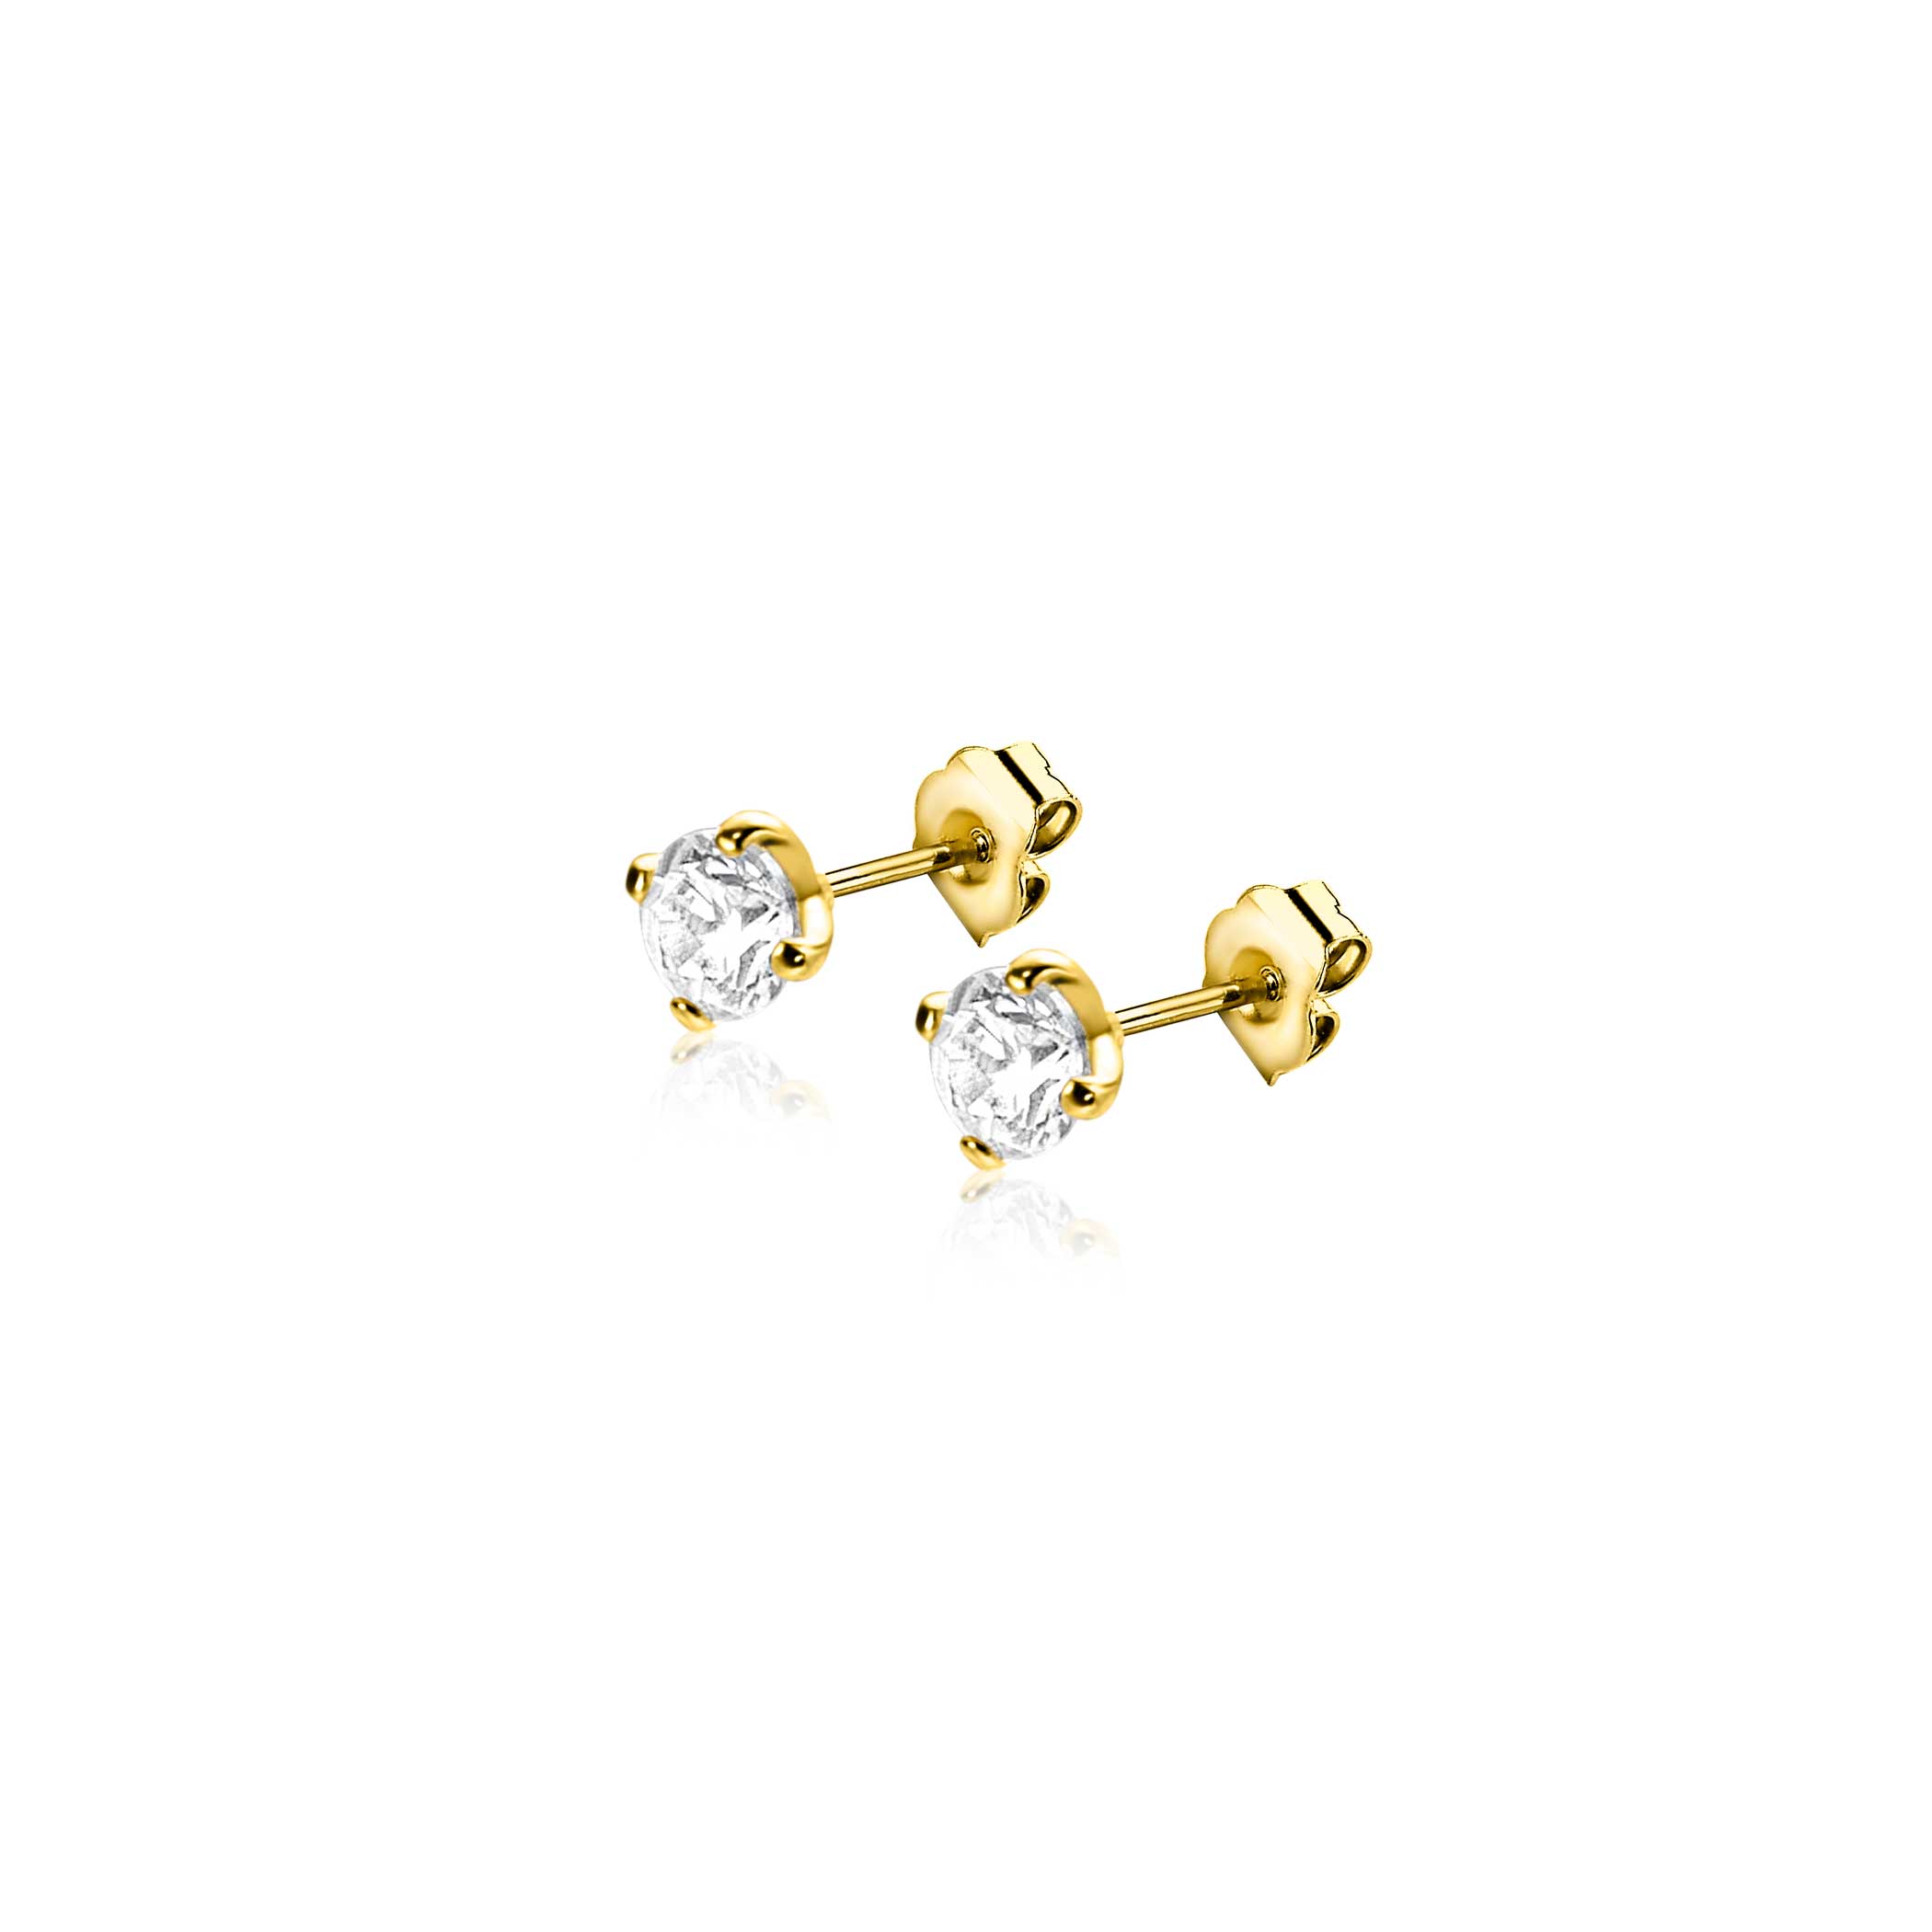 3mm ZINZI 14K Gold Stud Earrings White Zirconia in Prong Setting ZGO475